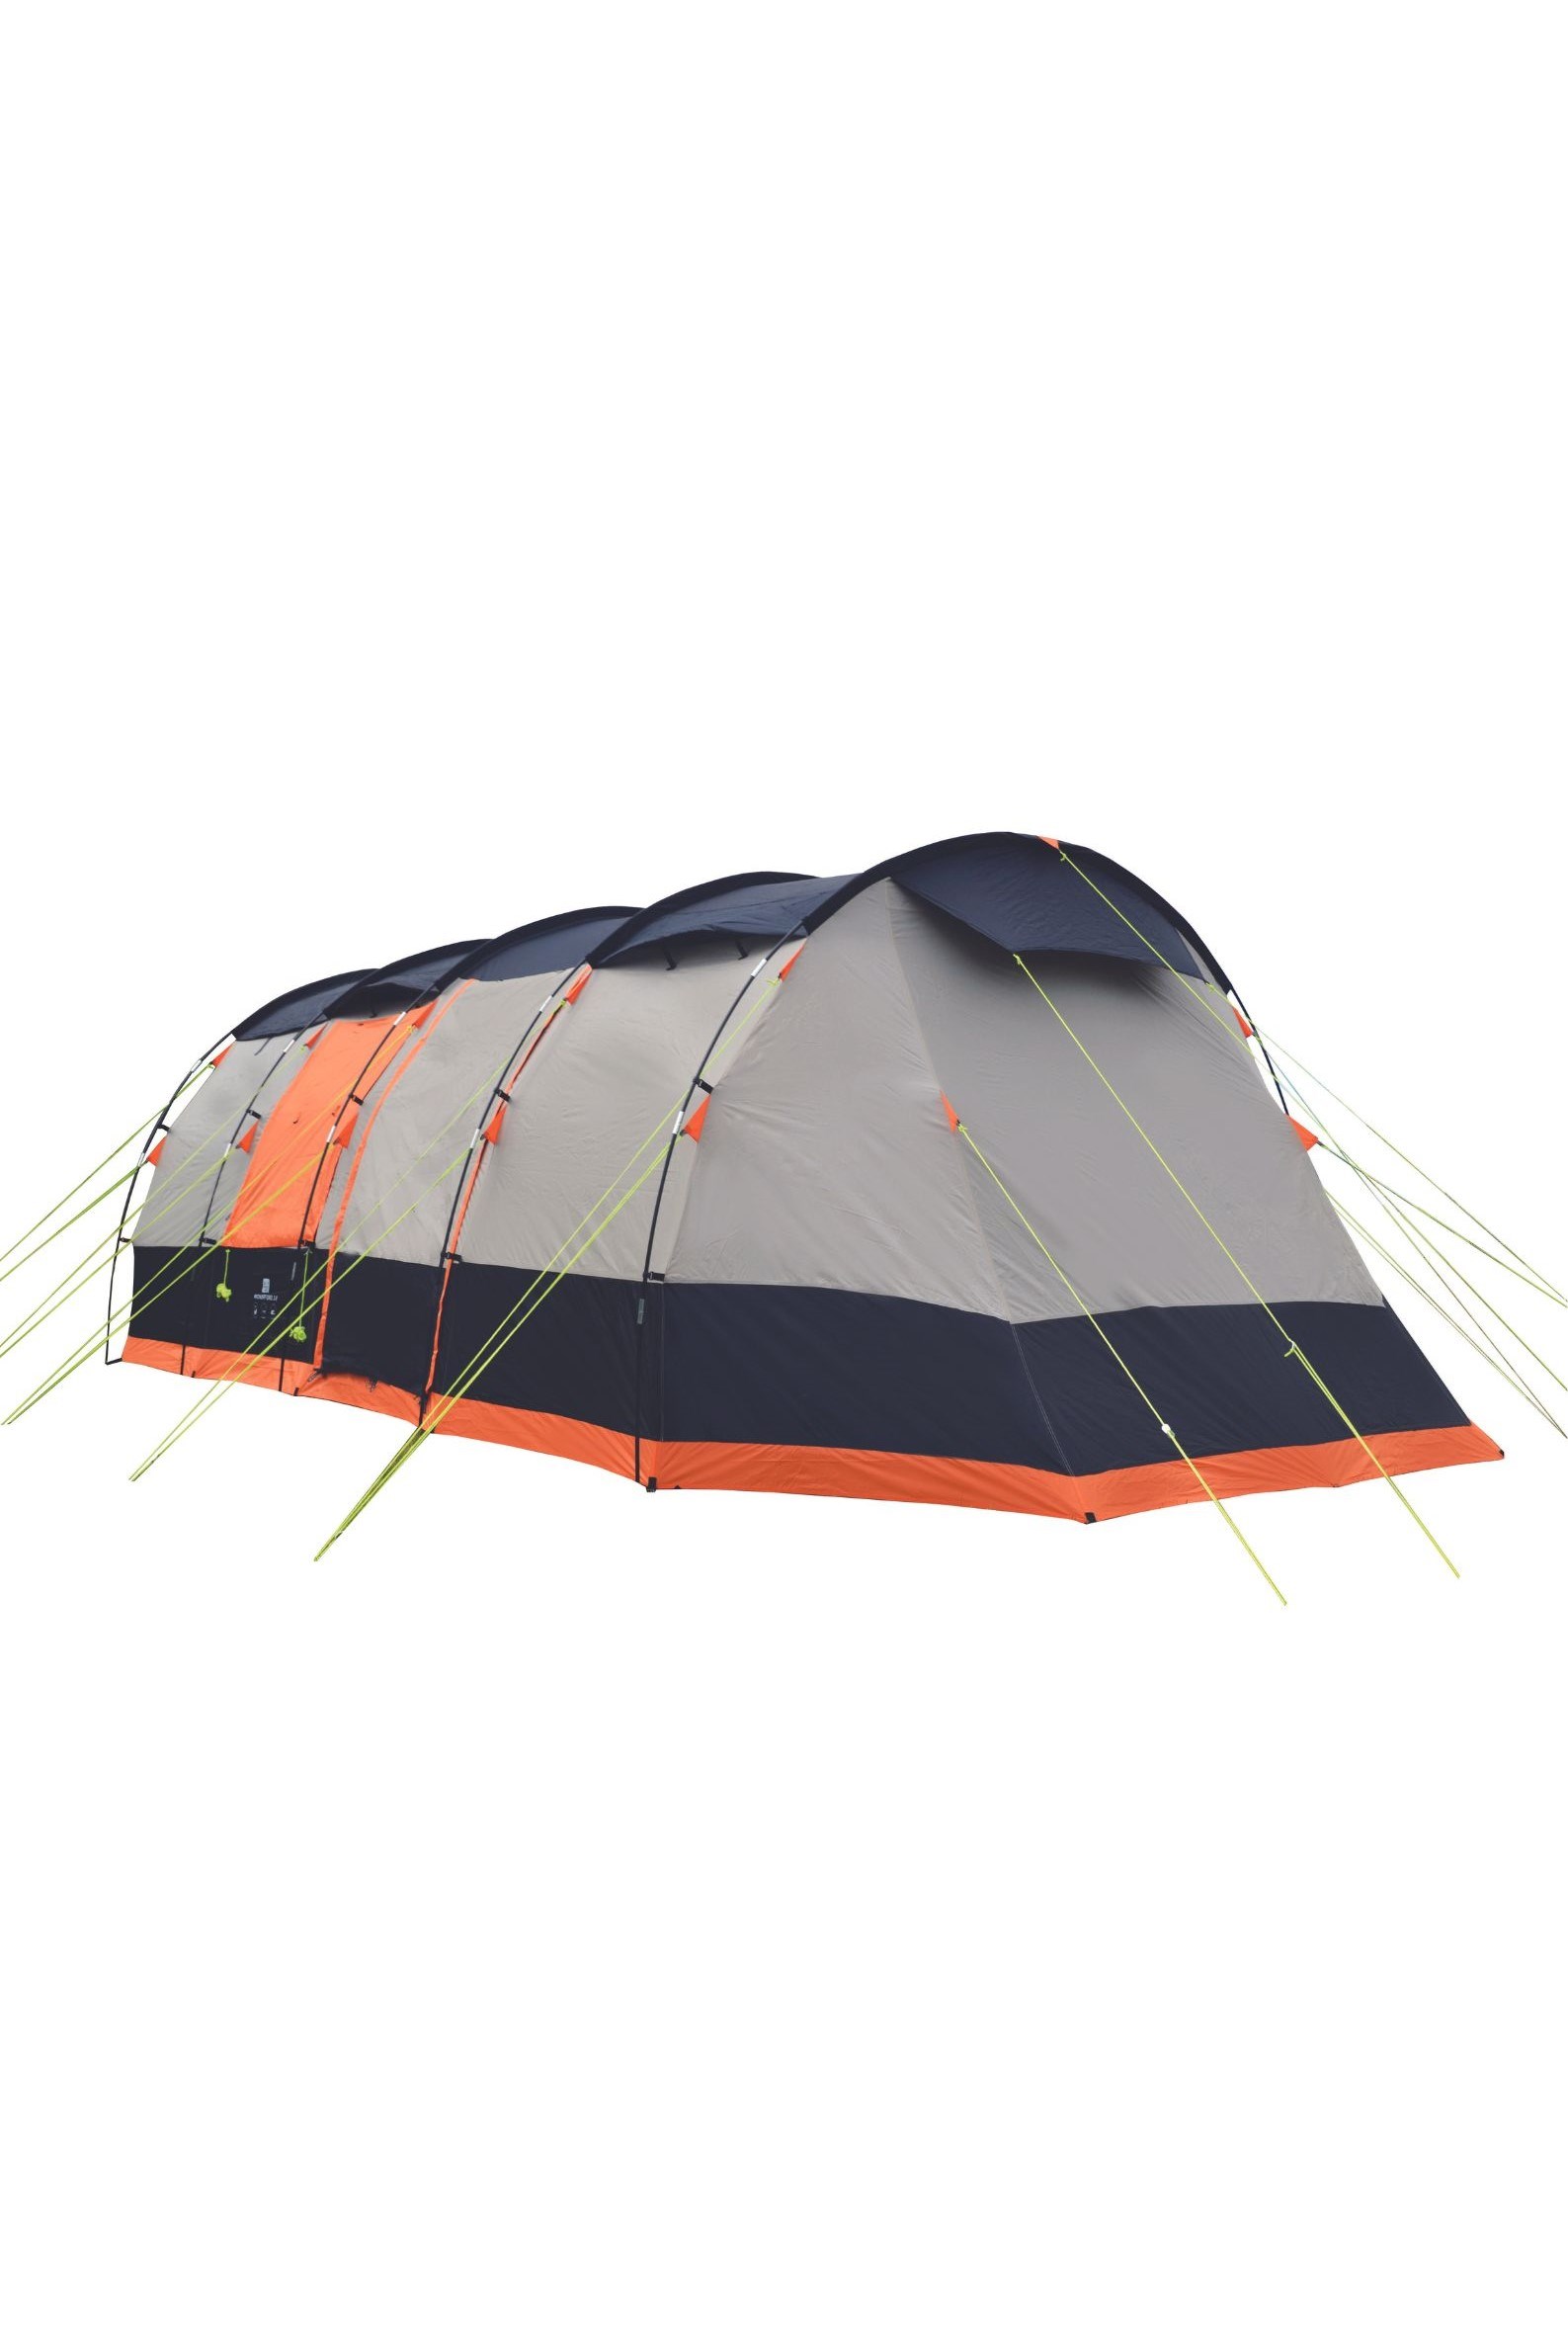 Wichenford 3. 0 8 Berth Tent -